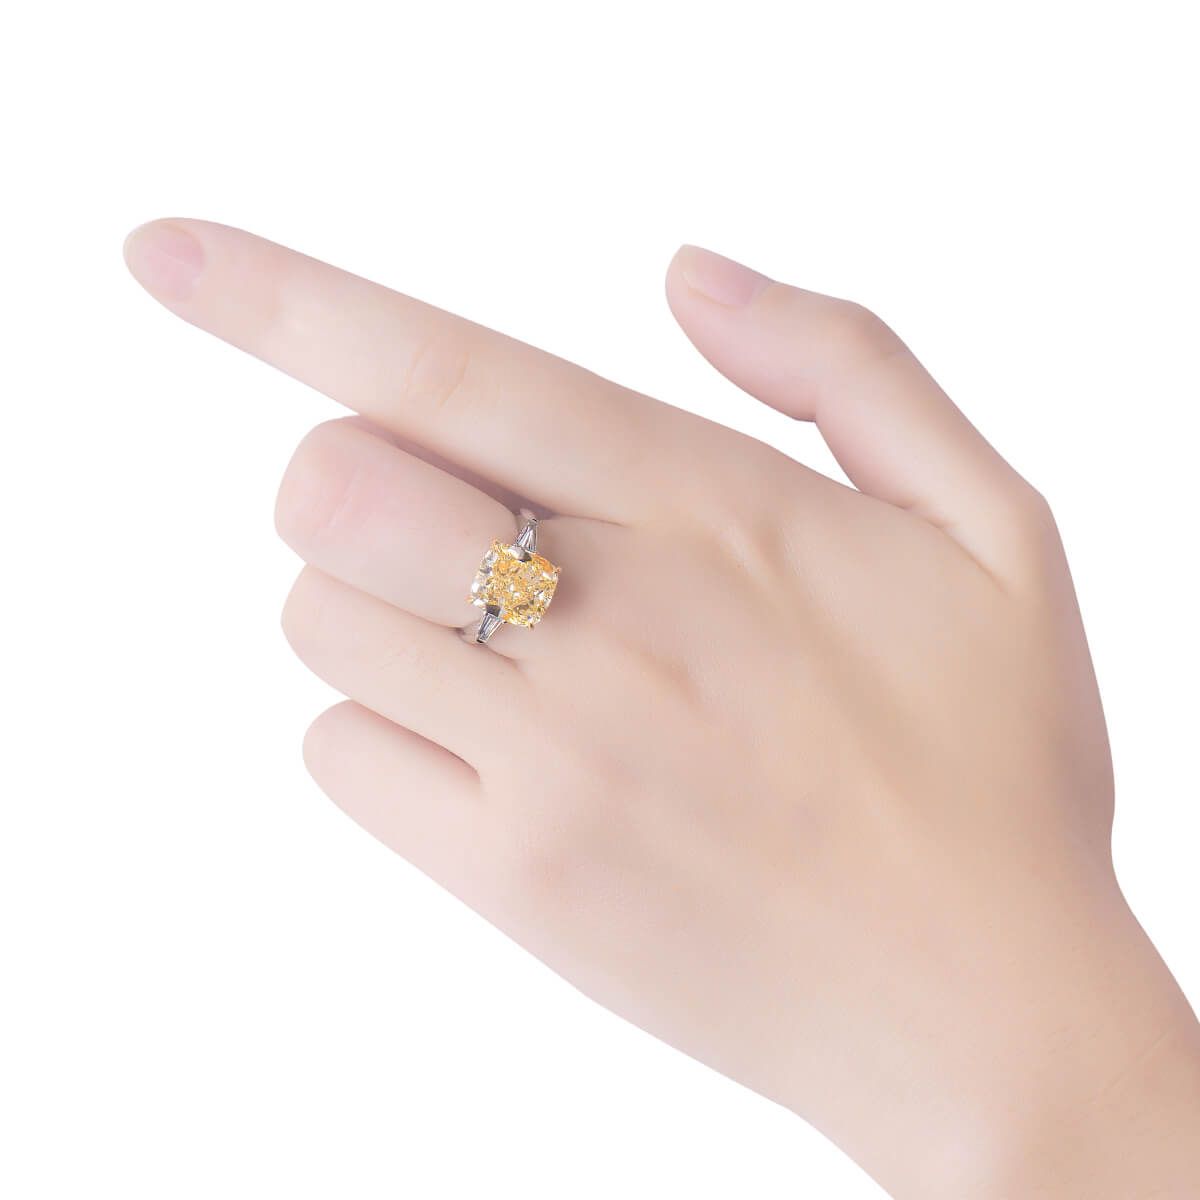 Light Yellow (Y-Z) Diamond Ring, 6.19 Ct. (6.56 Ct. TW), Cushion shape, GIA Certified, 2195520342